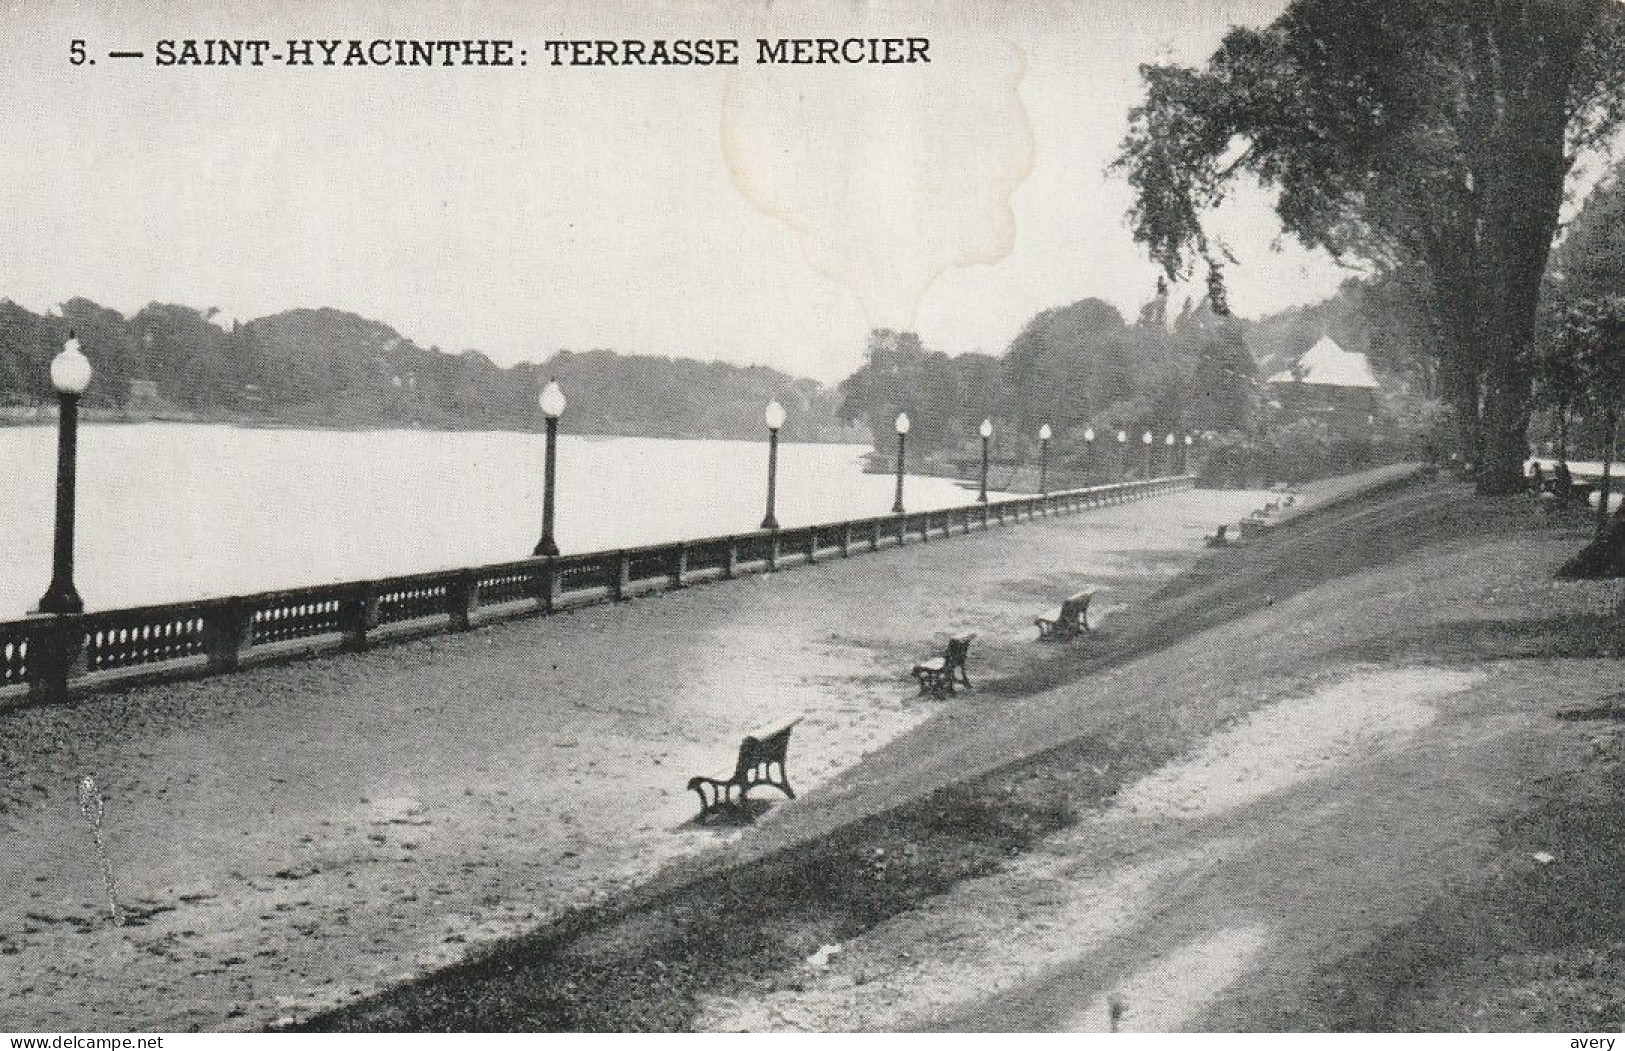 Terrace Honore Mercier, Saint-Hyacinthe, Quebec - St. Hyacinthe